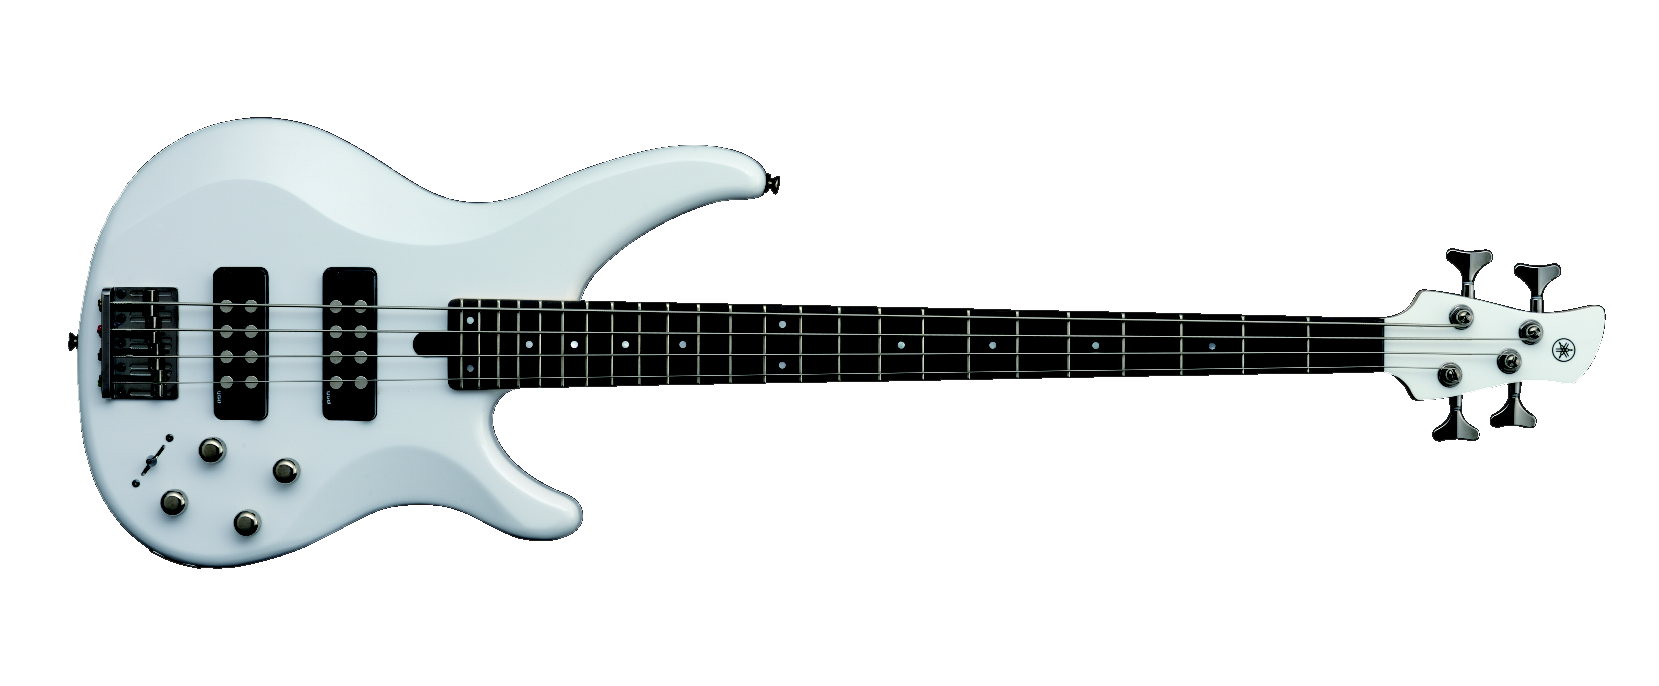 Bass PNG HD - 138447